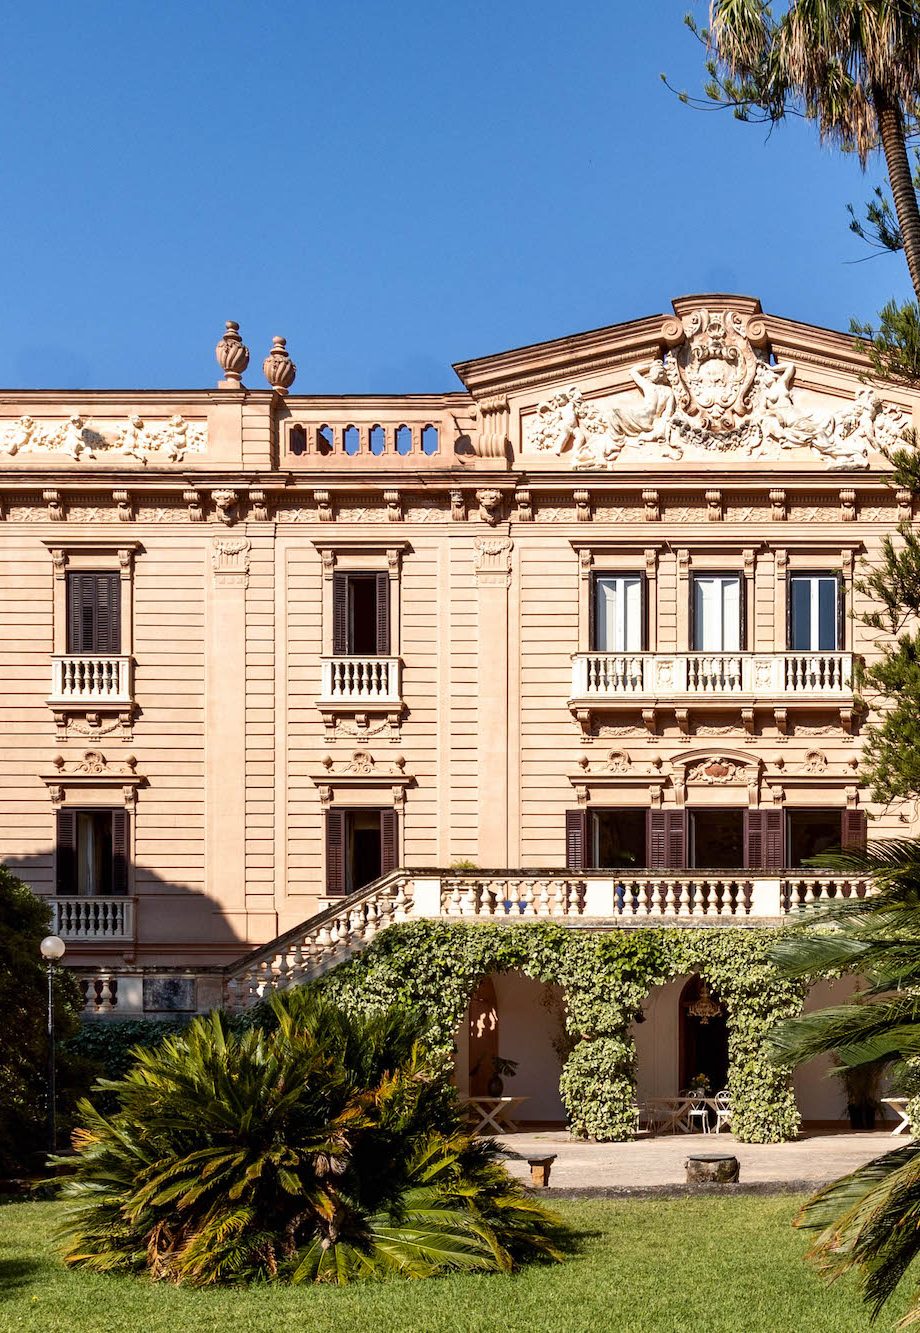 de-imposante-siciliaanse-villa-uit-the-white-lotus-is-nu-te-boeken-op-airbnb-238746